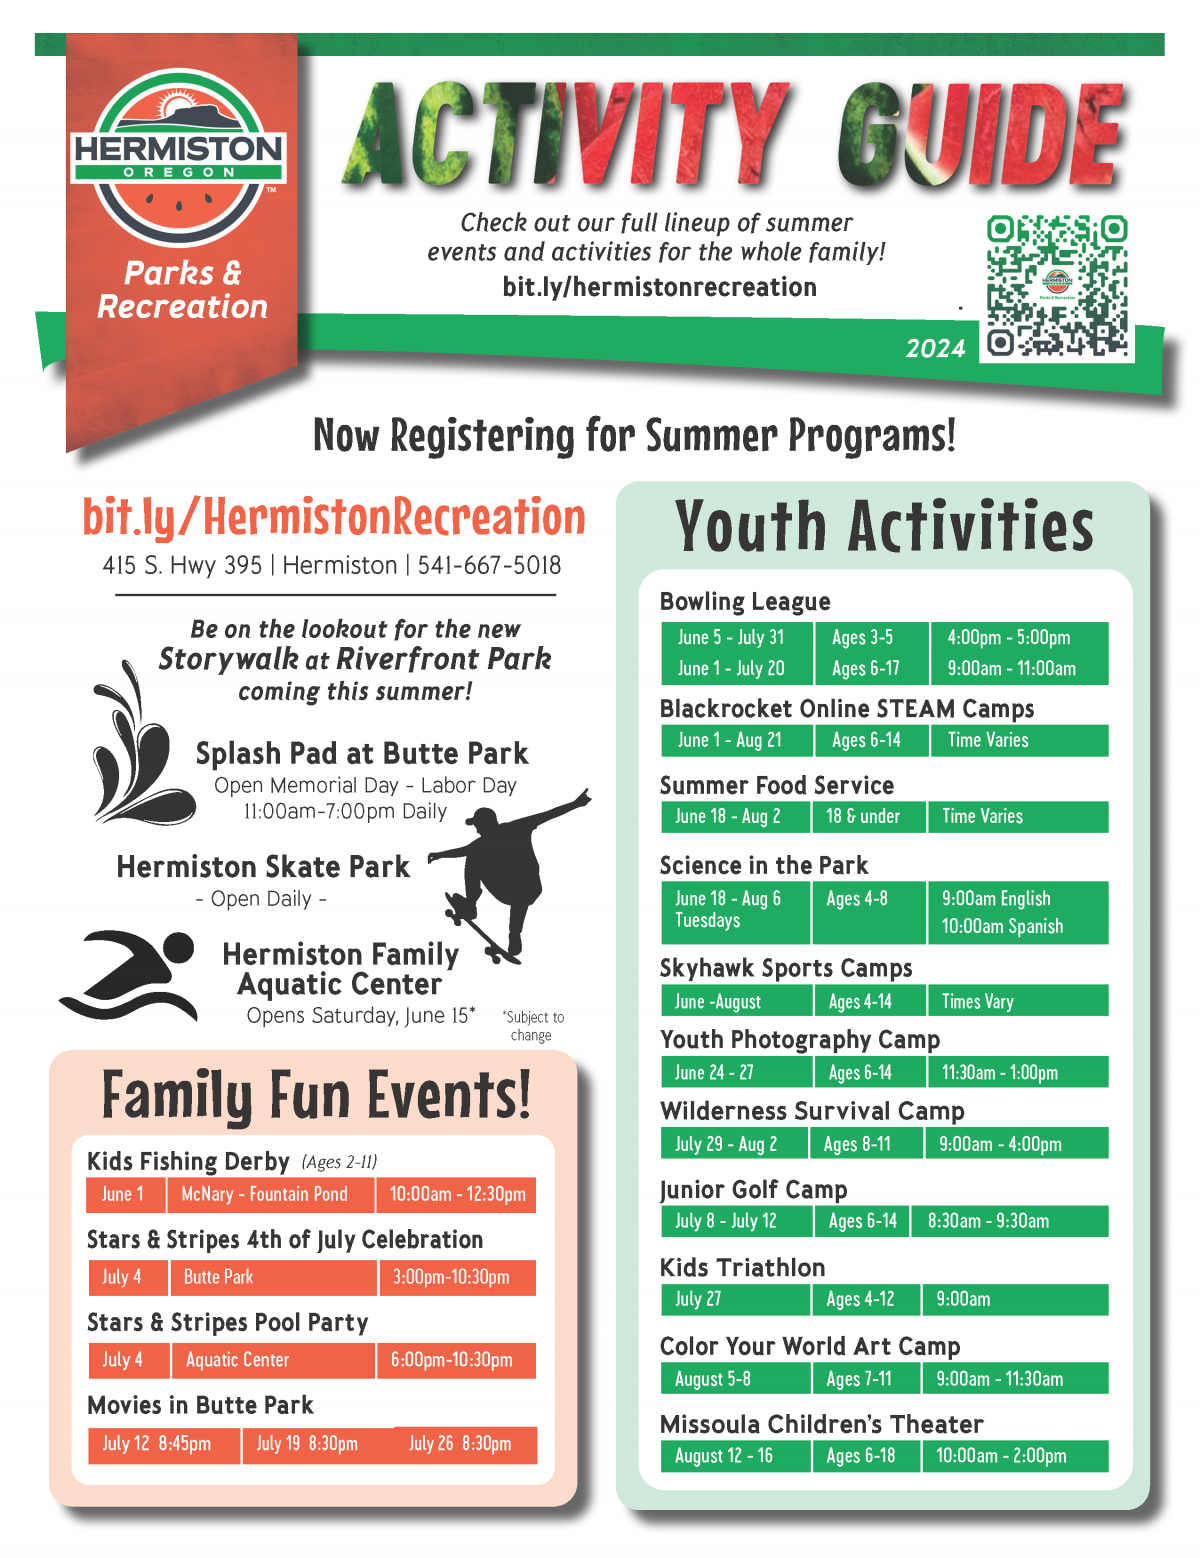 Summer Activity List